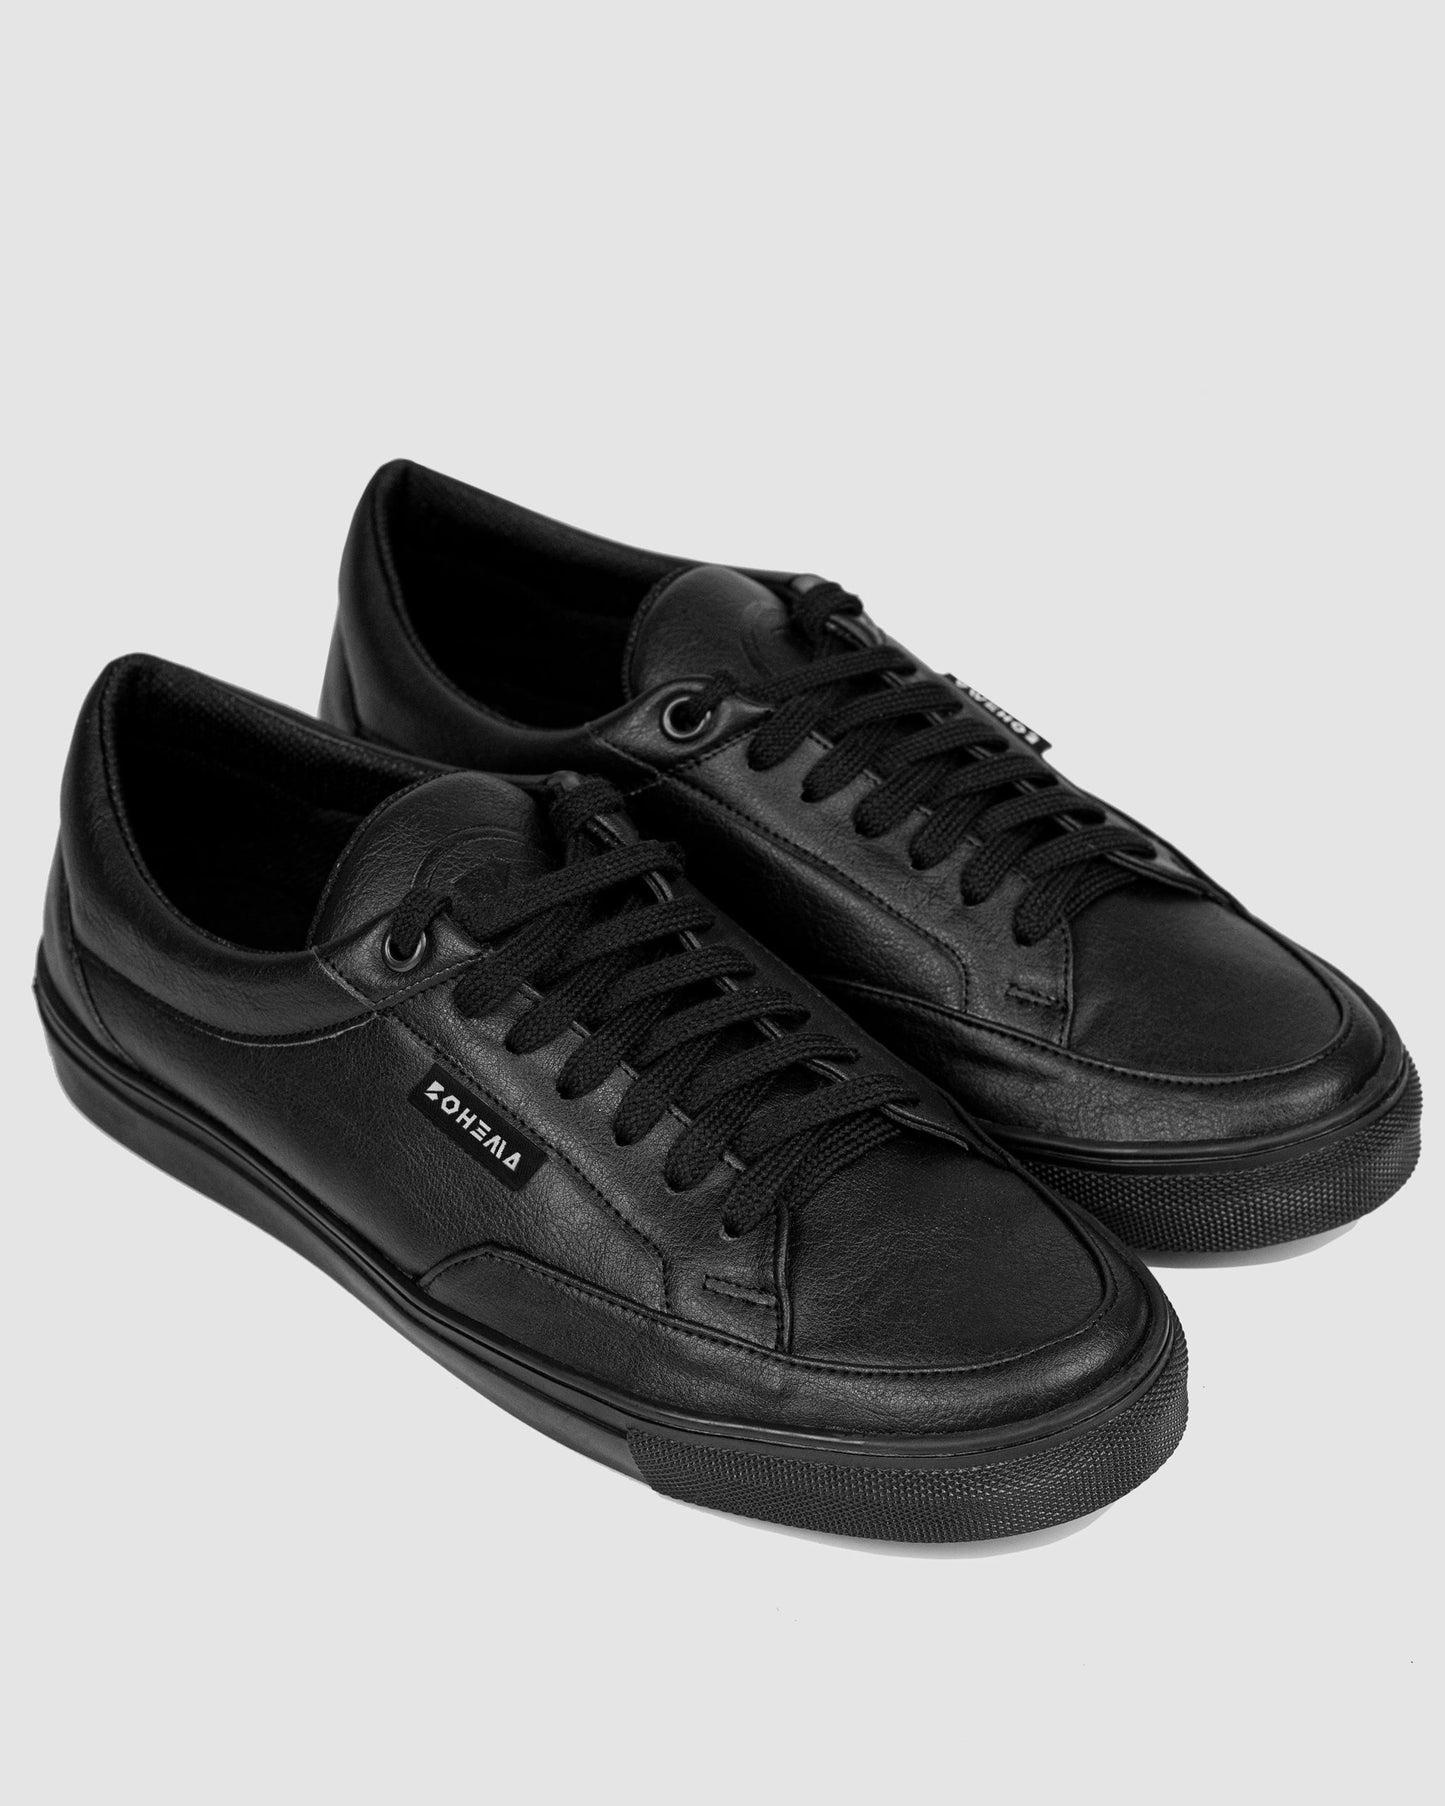 Sneakers Awake Black sneakers made of Vegea grape leather